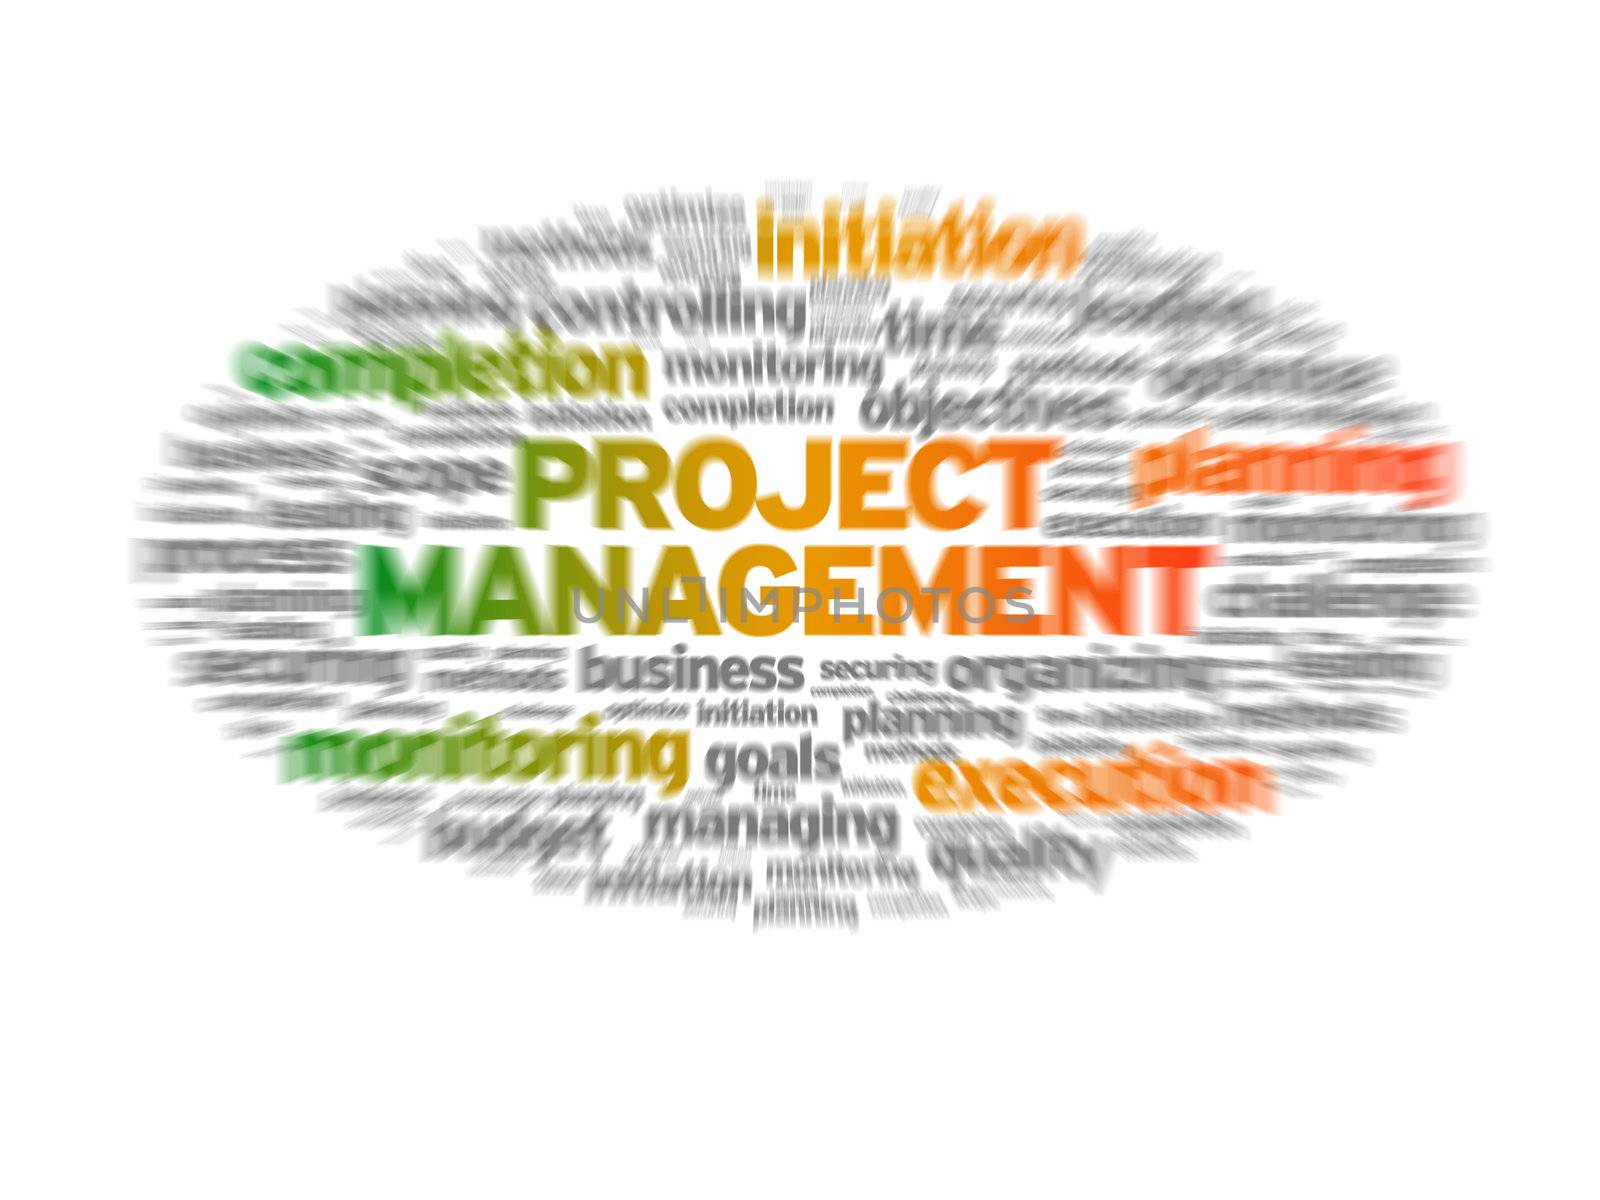 Blurred Project Management illustration on white background.